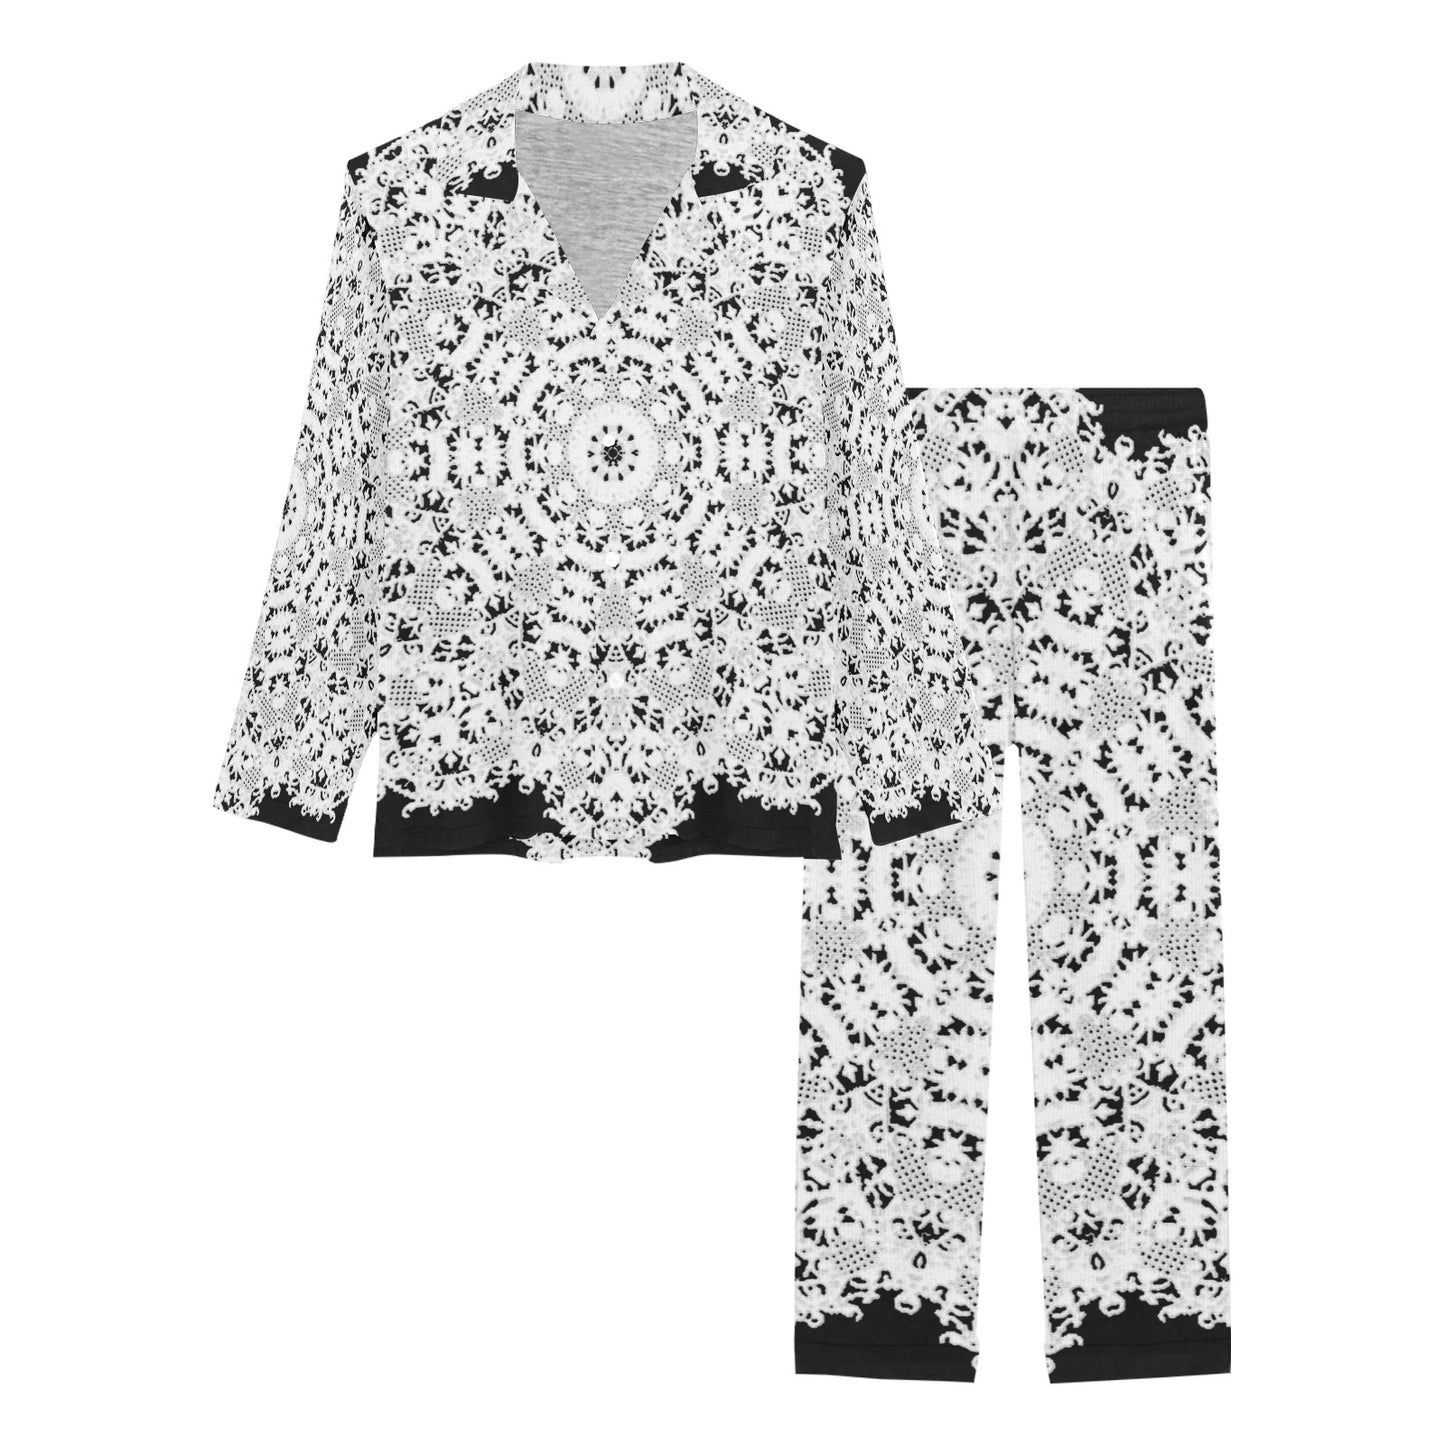 Victorian printed lace pajama set, design 50 Women's Long Pajama Set (Sets 02)